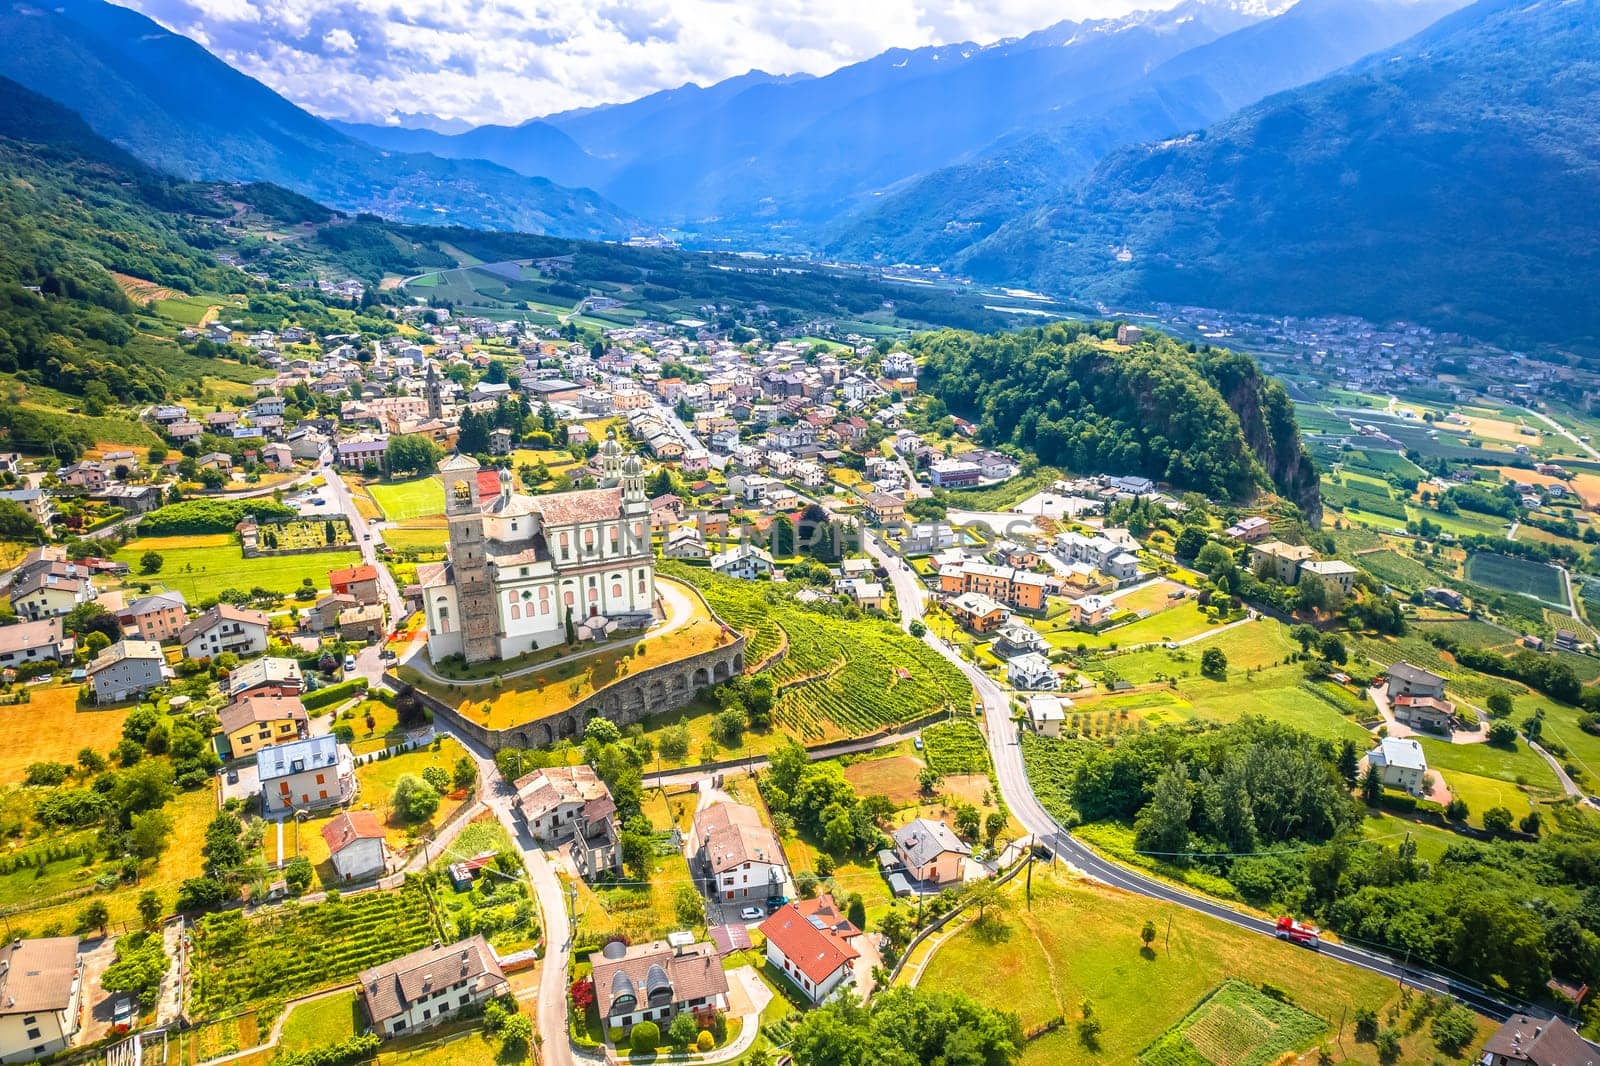 Idyllic mountain town of Tresivio in Province of Sondrio, Santa Casa Lauretana monastery. Lombardy region of Italy